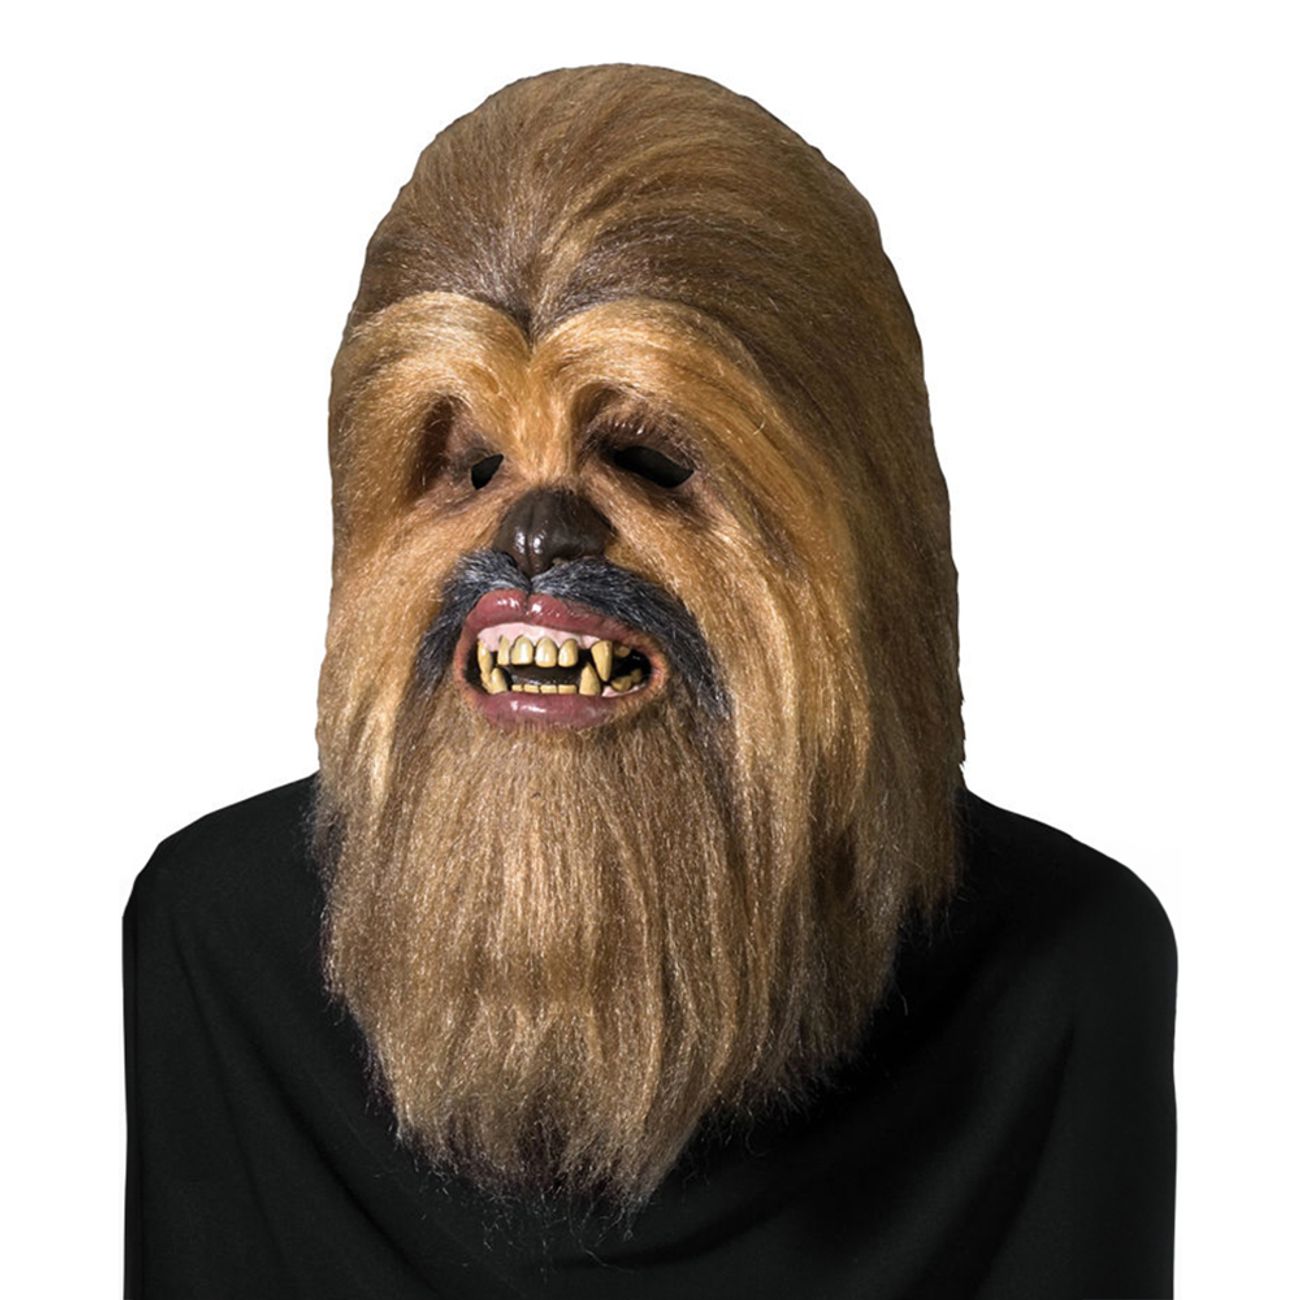 star-wars-chewbacca-supreme-edition-mask-36447-2